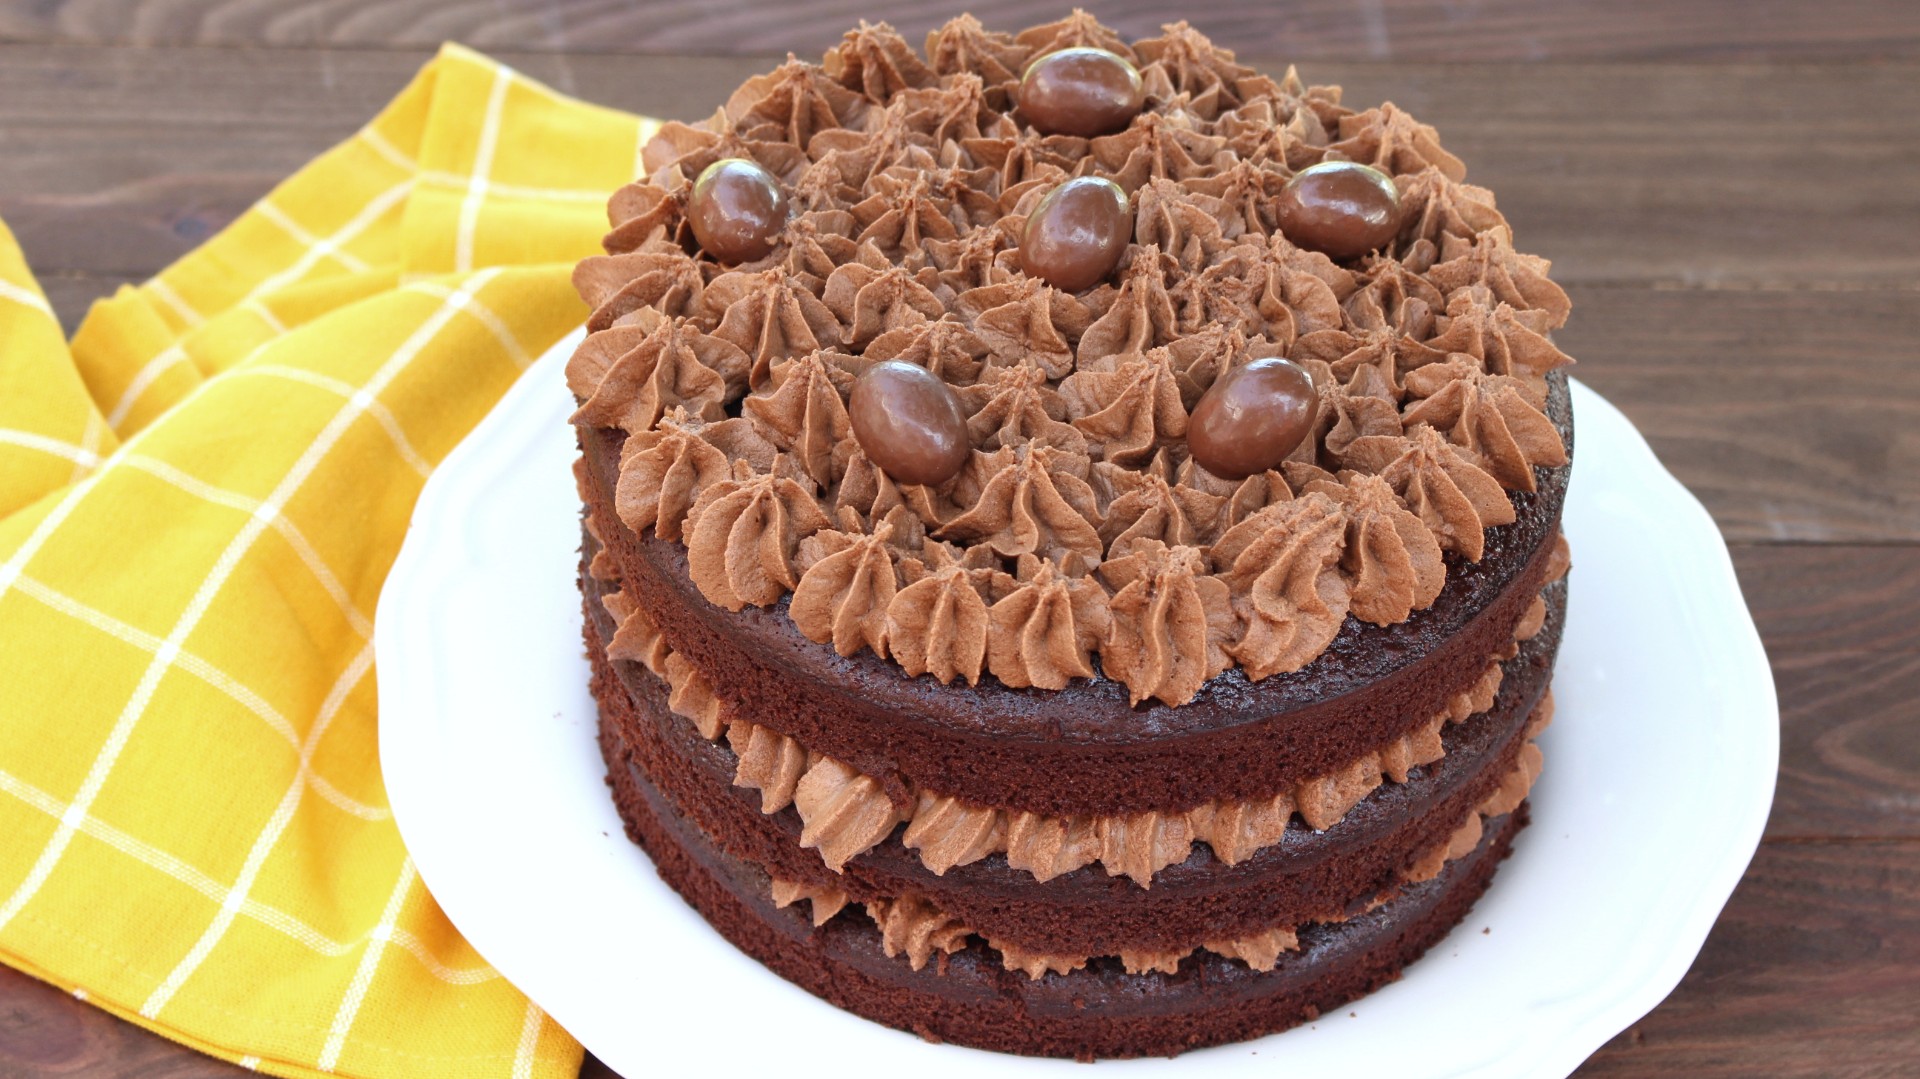 Tarta de chocolate ideal para cumpleaños - Saltando la dieta